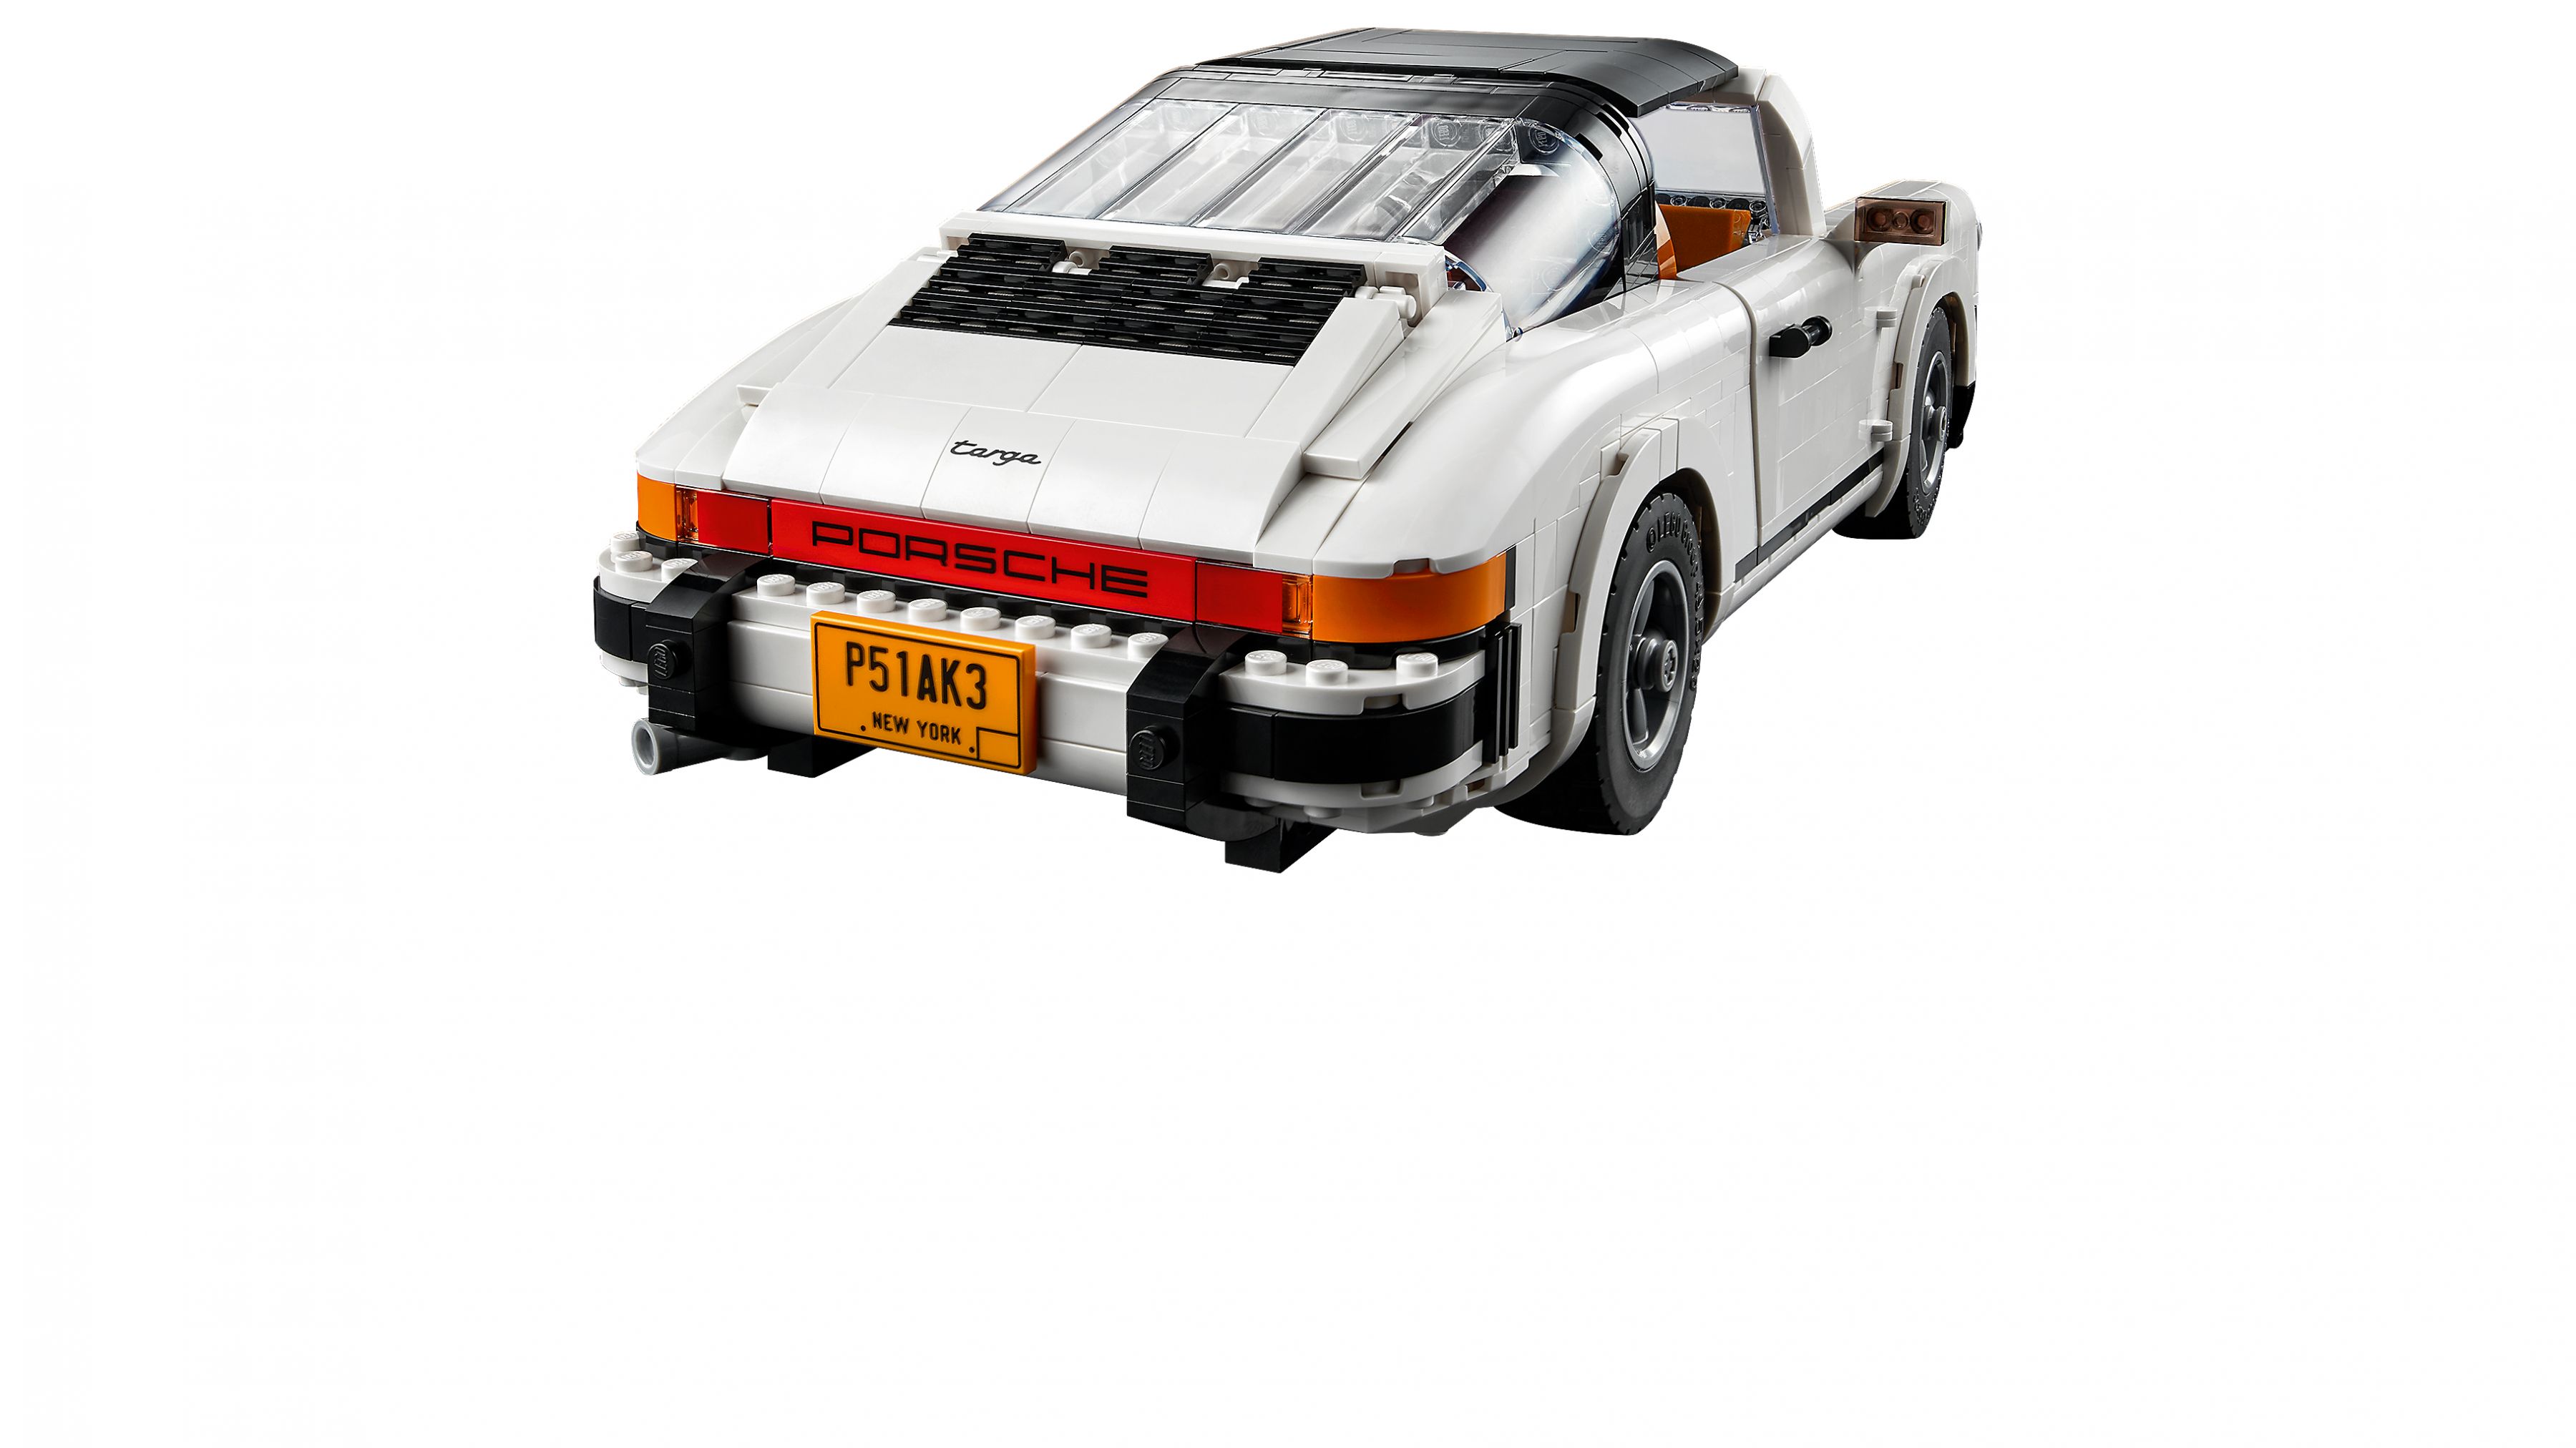 LEGO Advanced Models 10295 Porsche 911 LEGO_10295_web_sec04_nobg.jpg